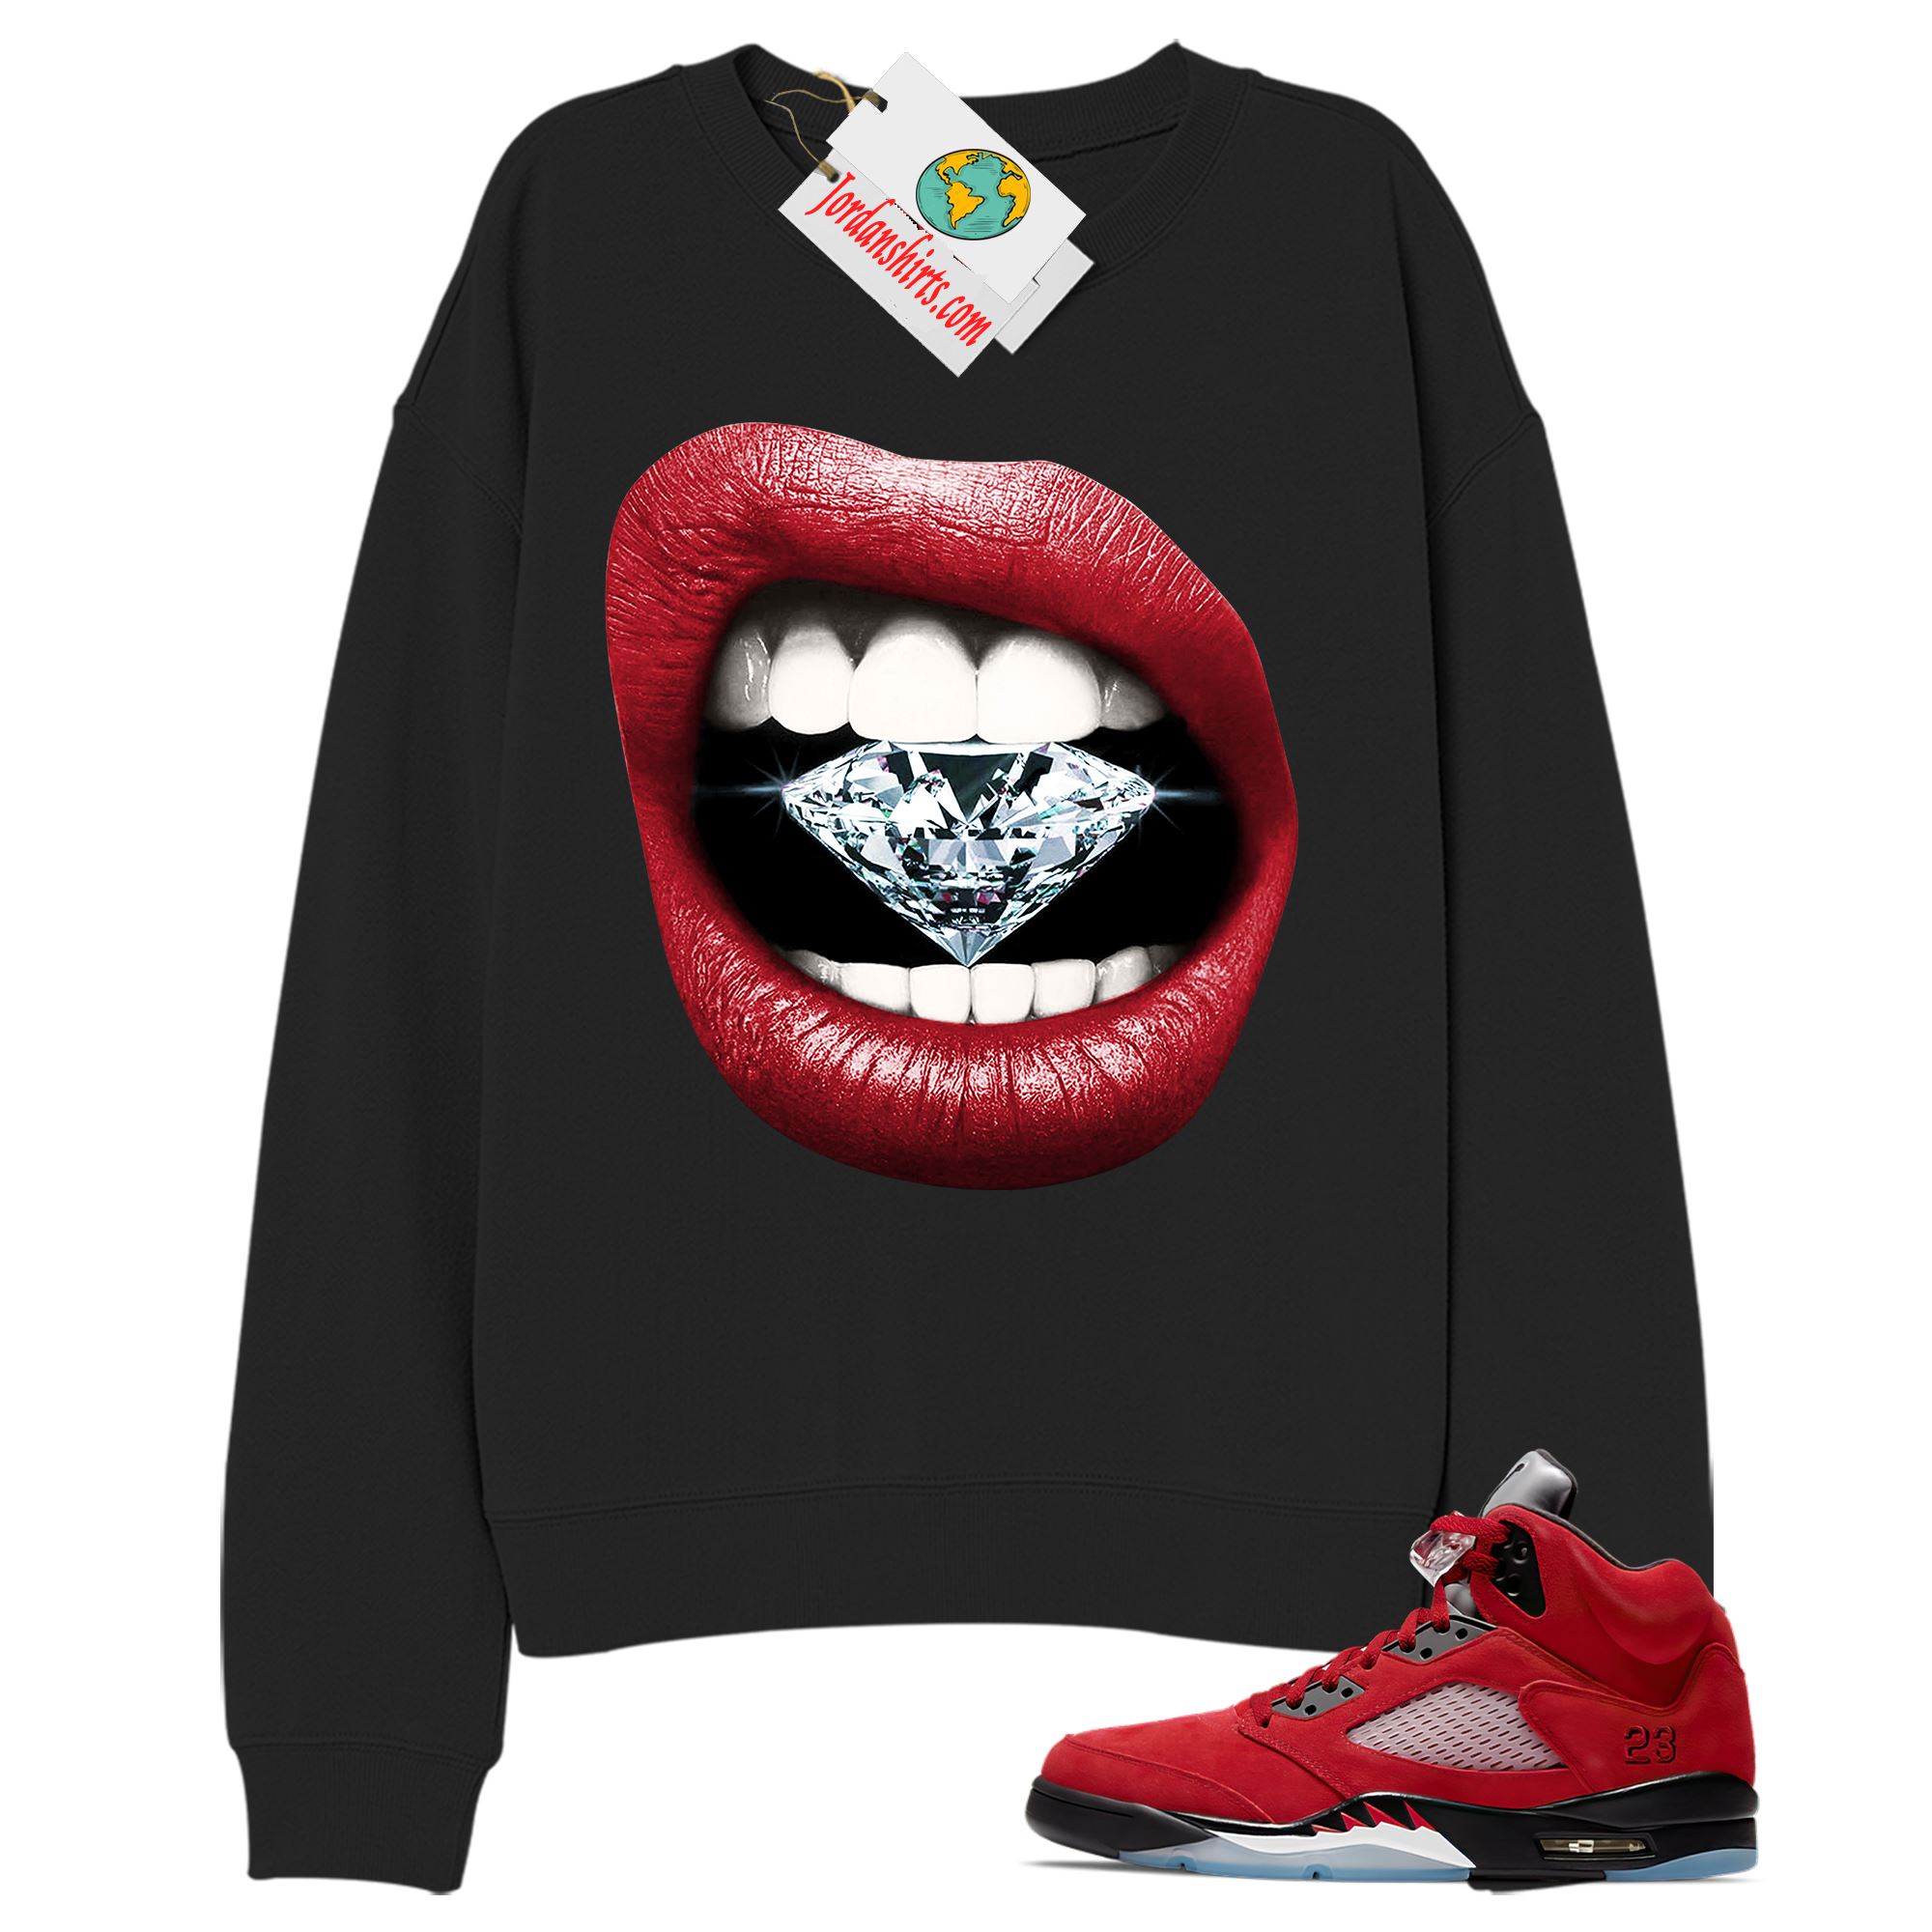 Jordan 5 Sweatshirt, Diamond Lip Black Sweatshirt Air Jordan 5 Raging Bull 5s-trungten-3ukpj Plus Size Up To 5xl